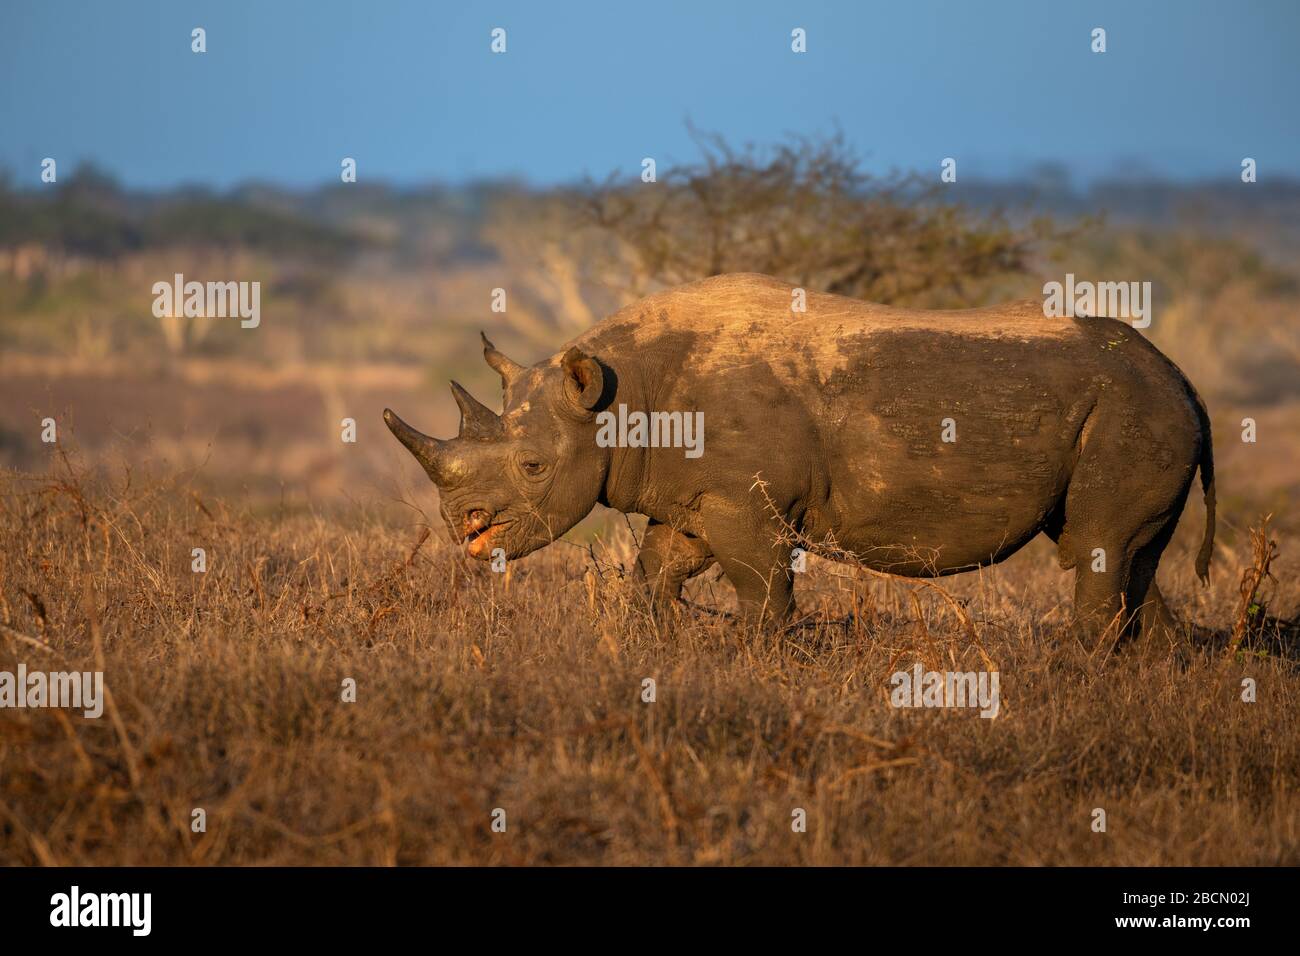 Black rhino in South Africa Stock Photo